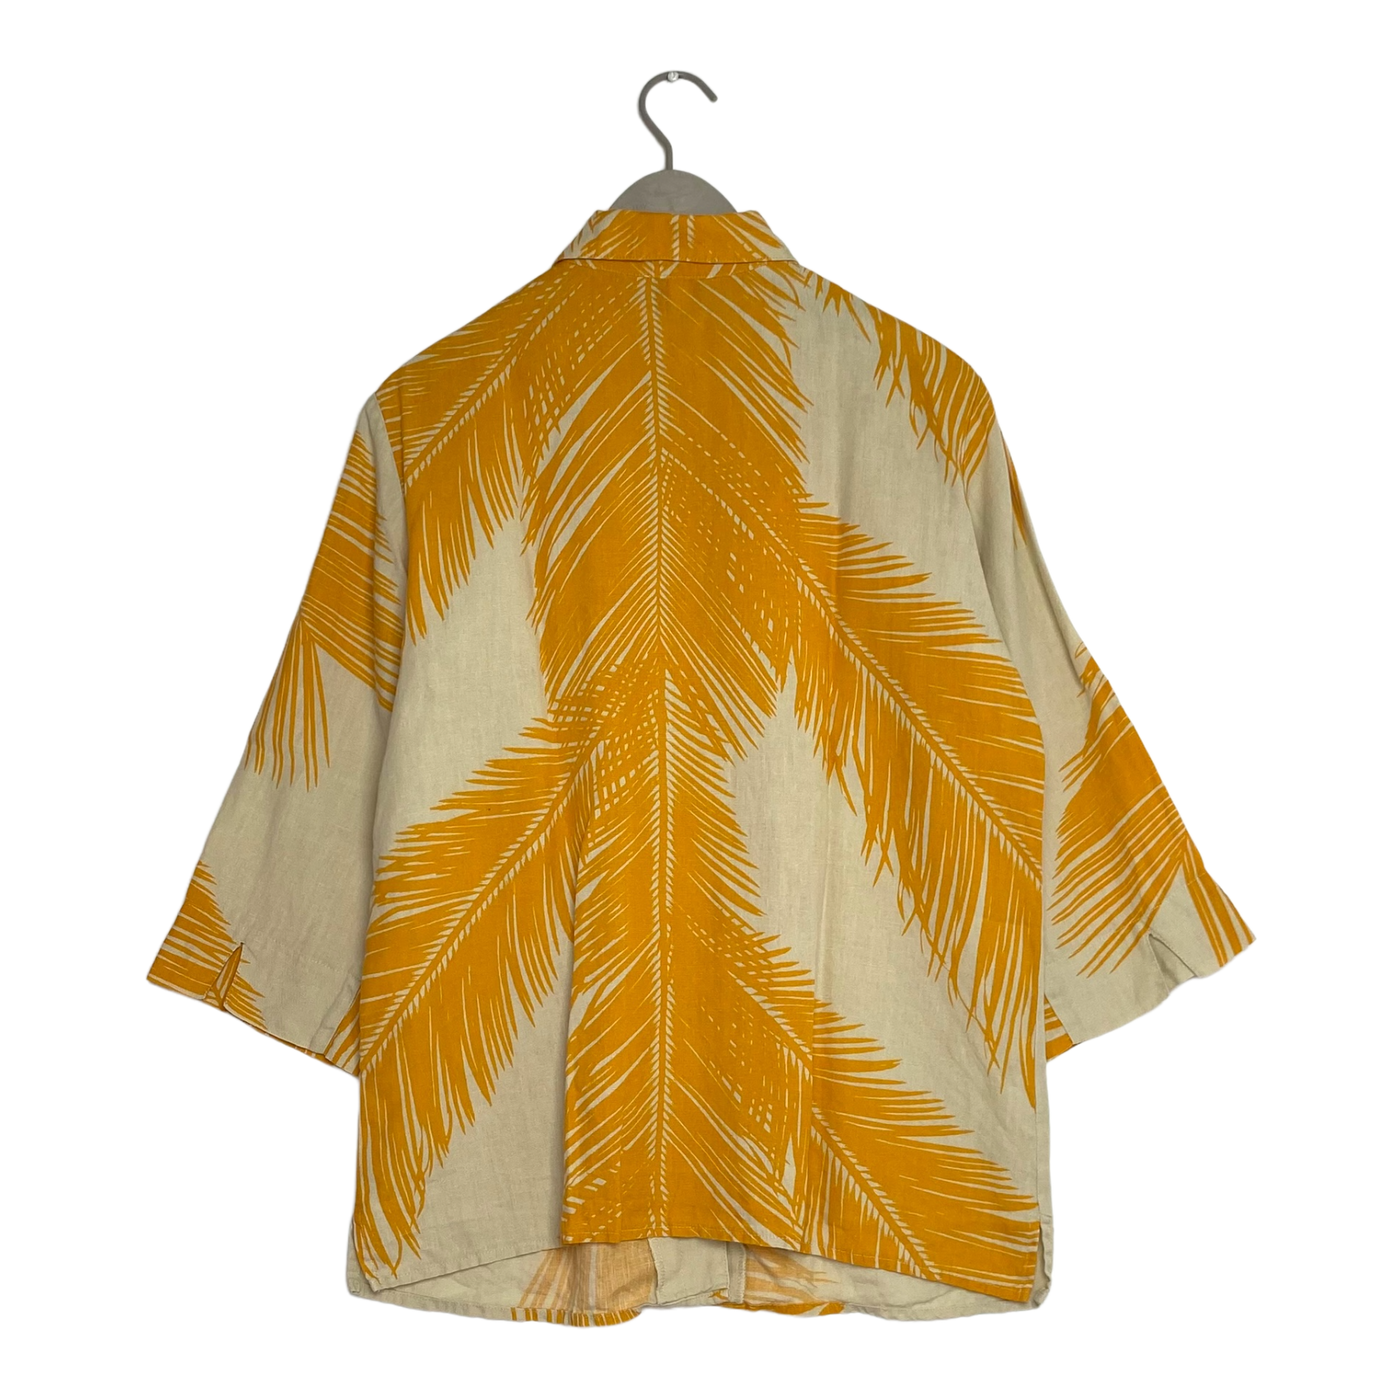 Marimekko linen shirt, orange | woman 38